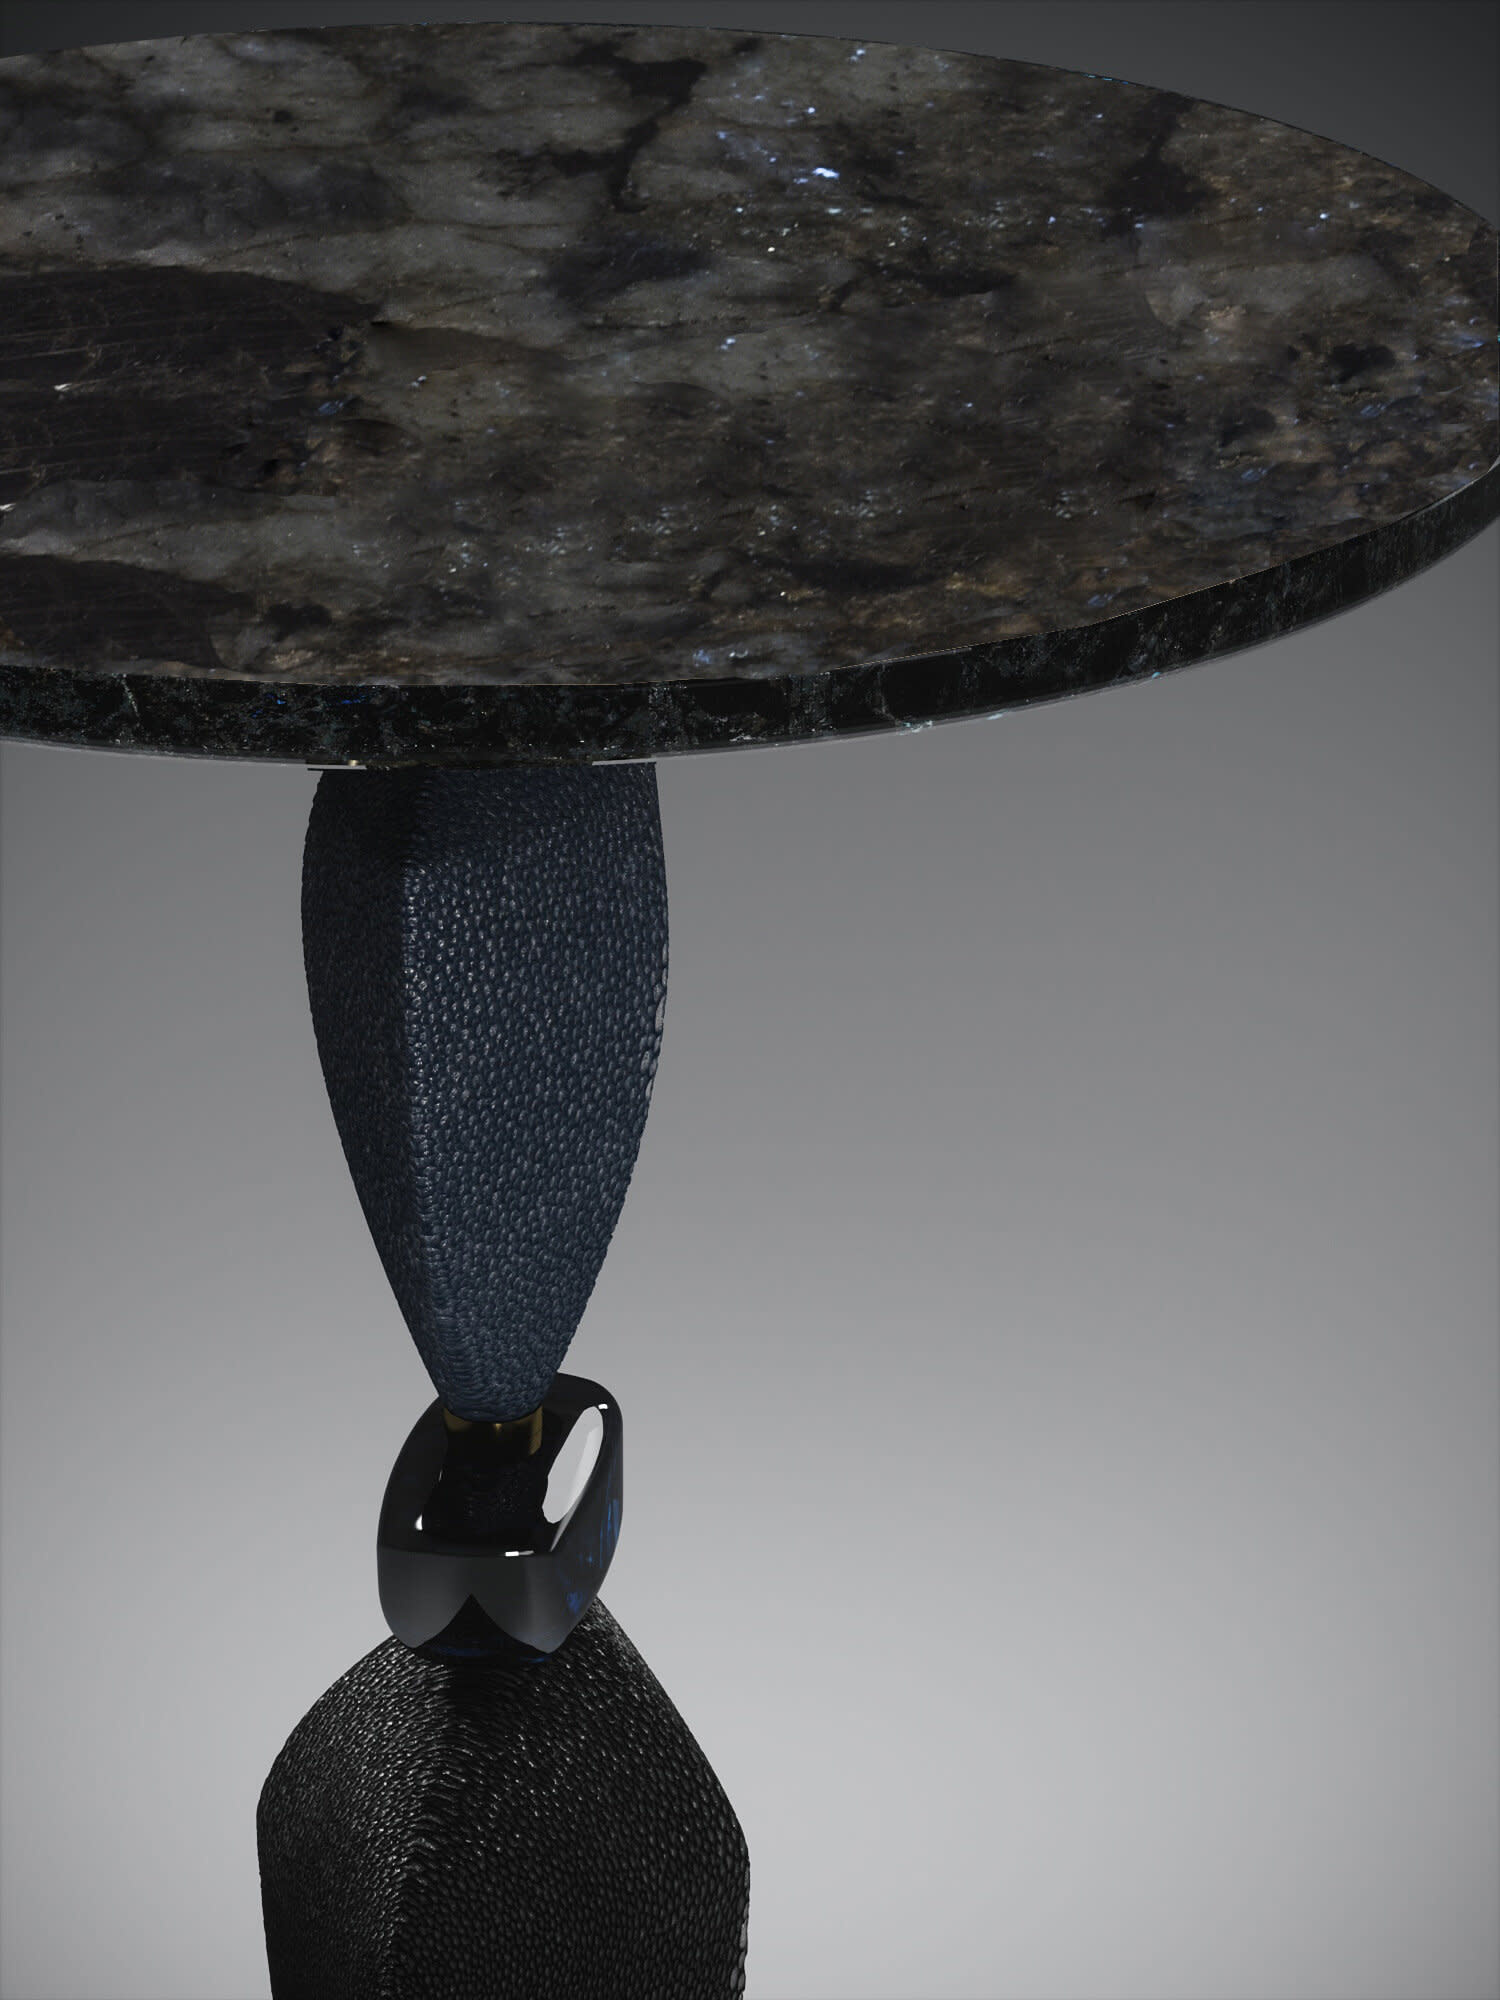 Kifu Paris - Cosmo Sky Side Table - Smokey black quartz, blue shagreen, blue penshell, coal black shagreen-6